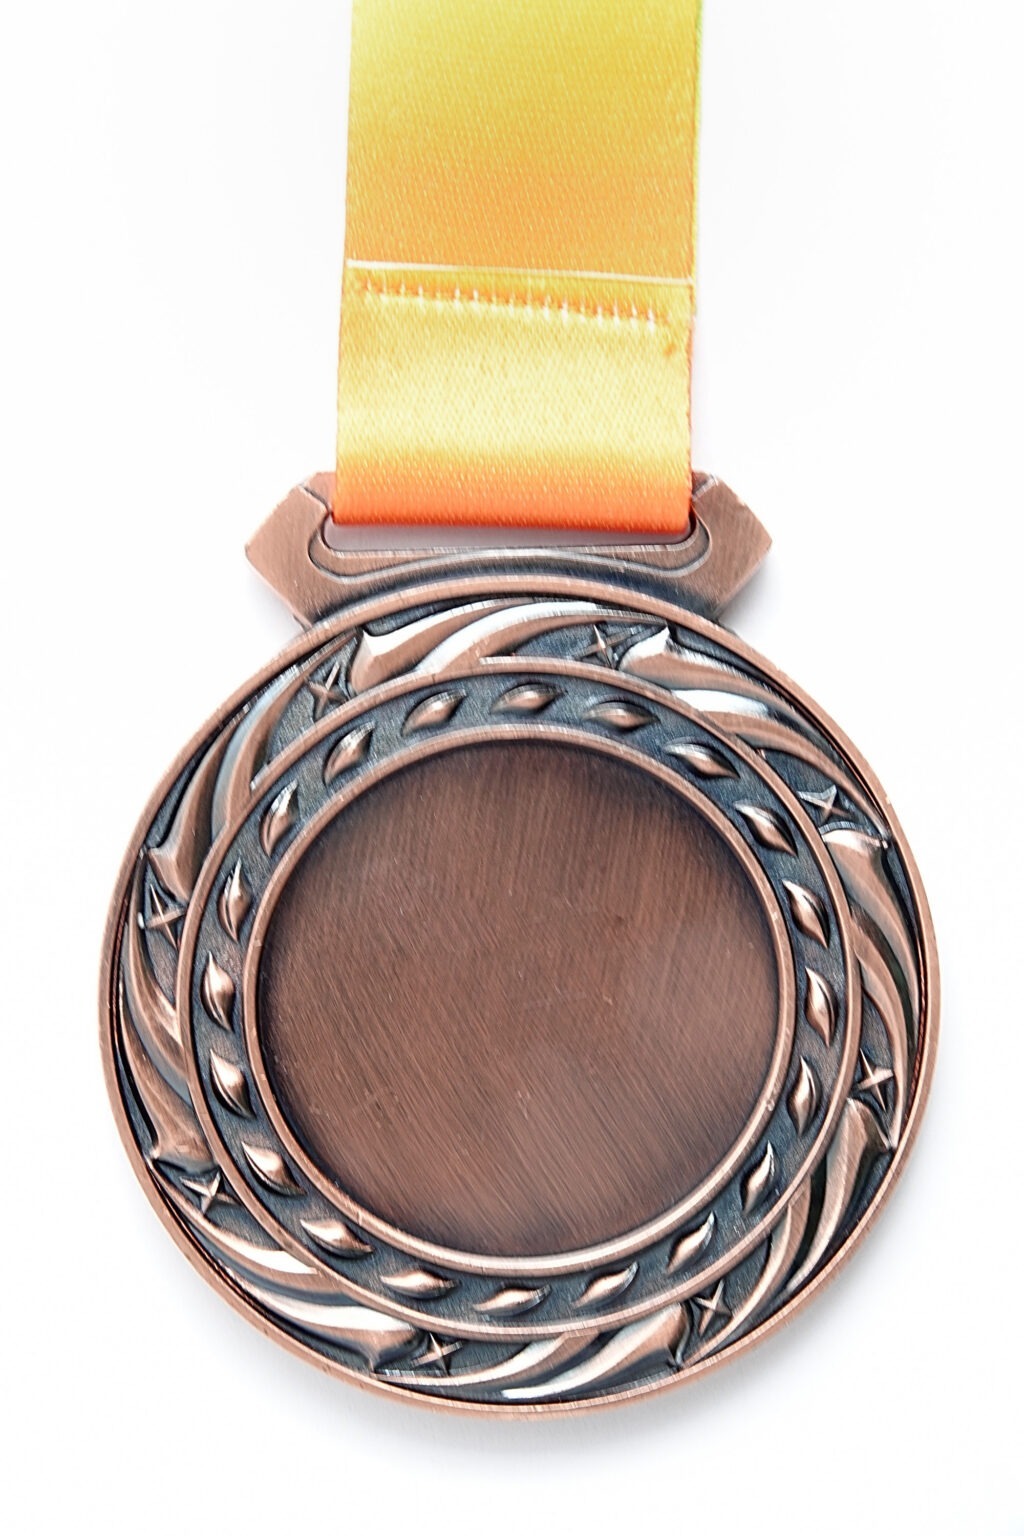 Rückseite Medaille "Swimming"